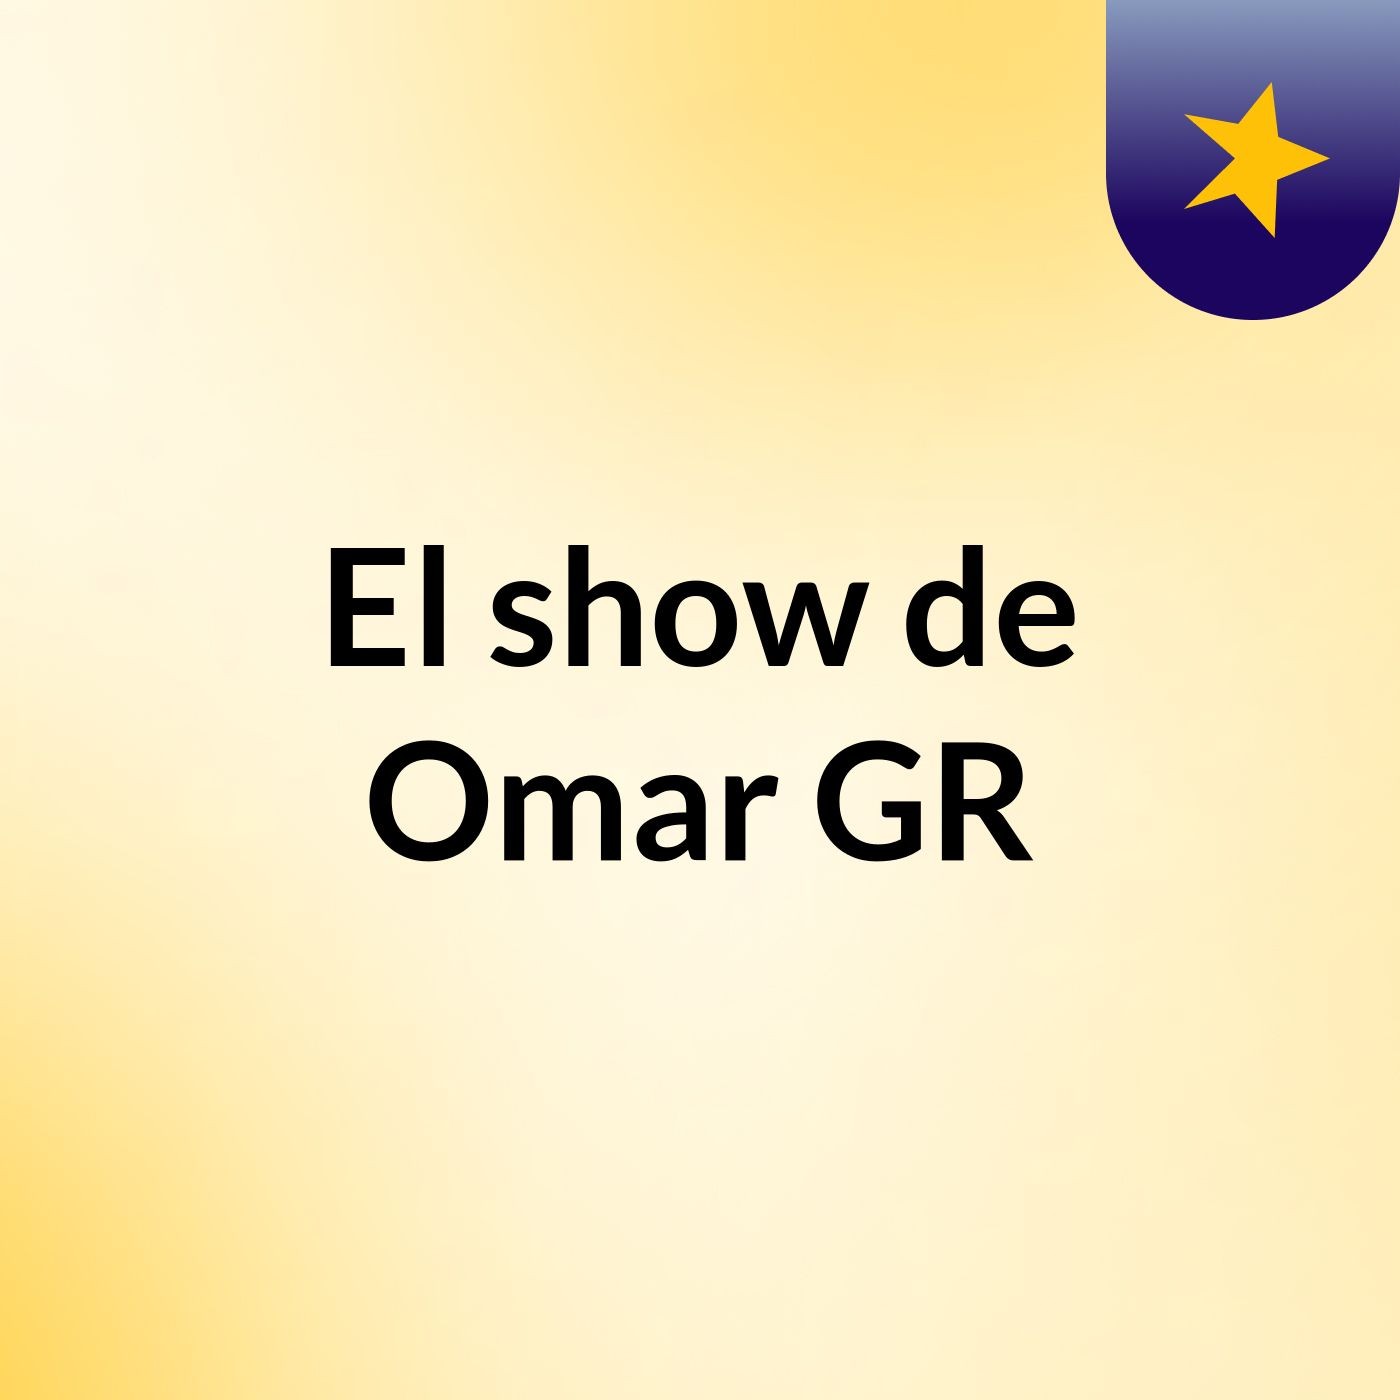 El show de Omar GR